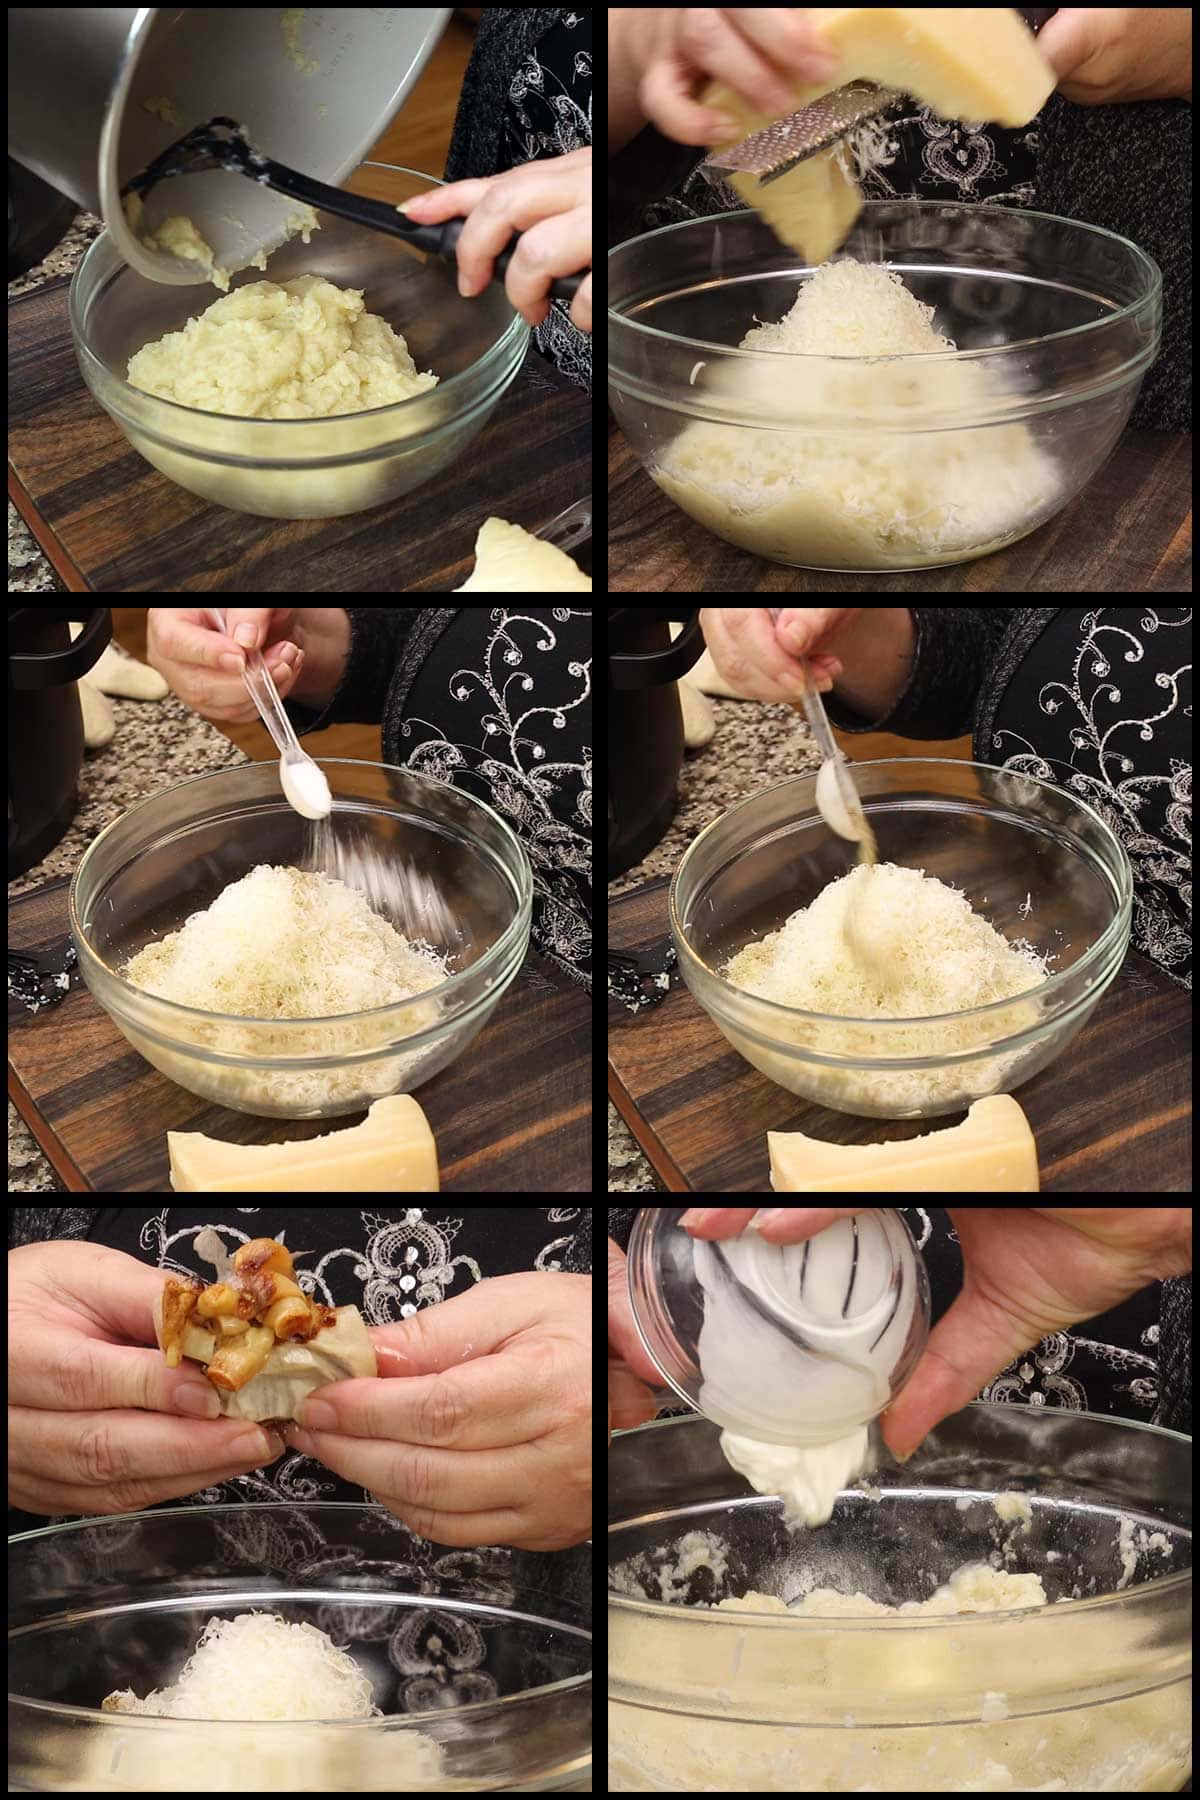 adding ingredients to the cauliflower before pureeing